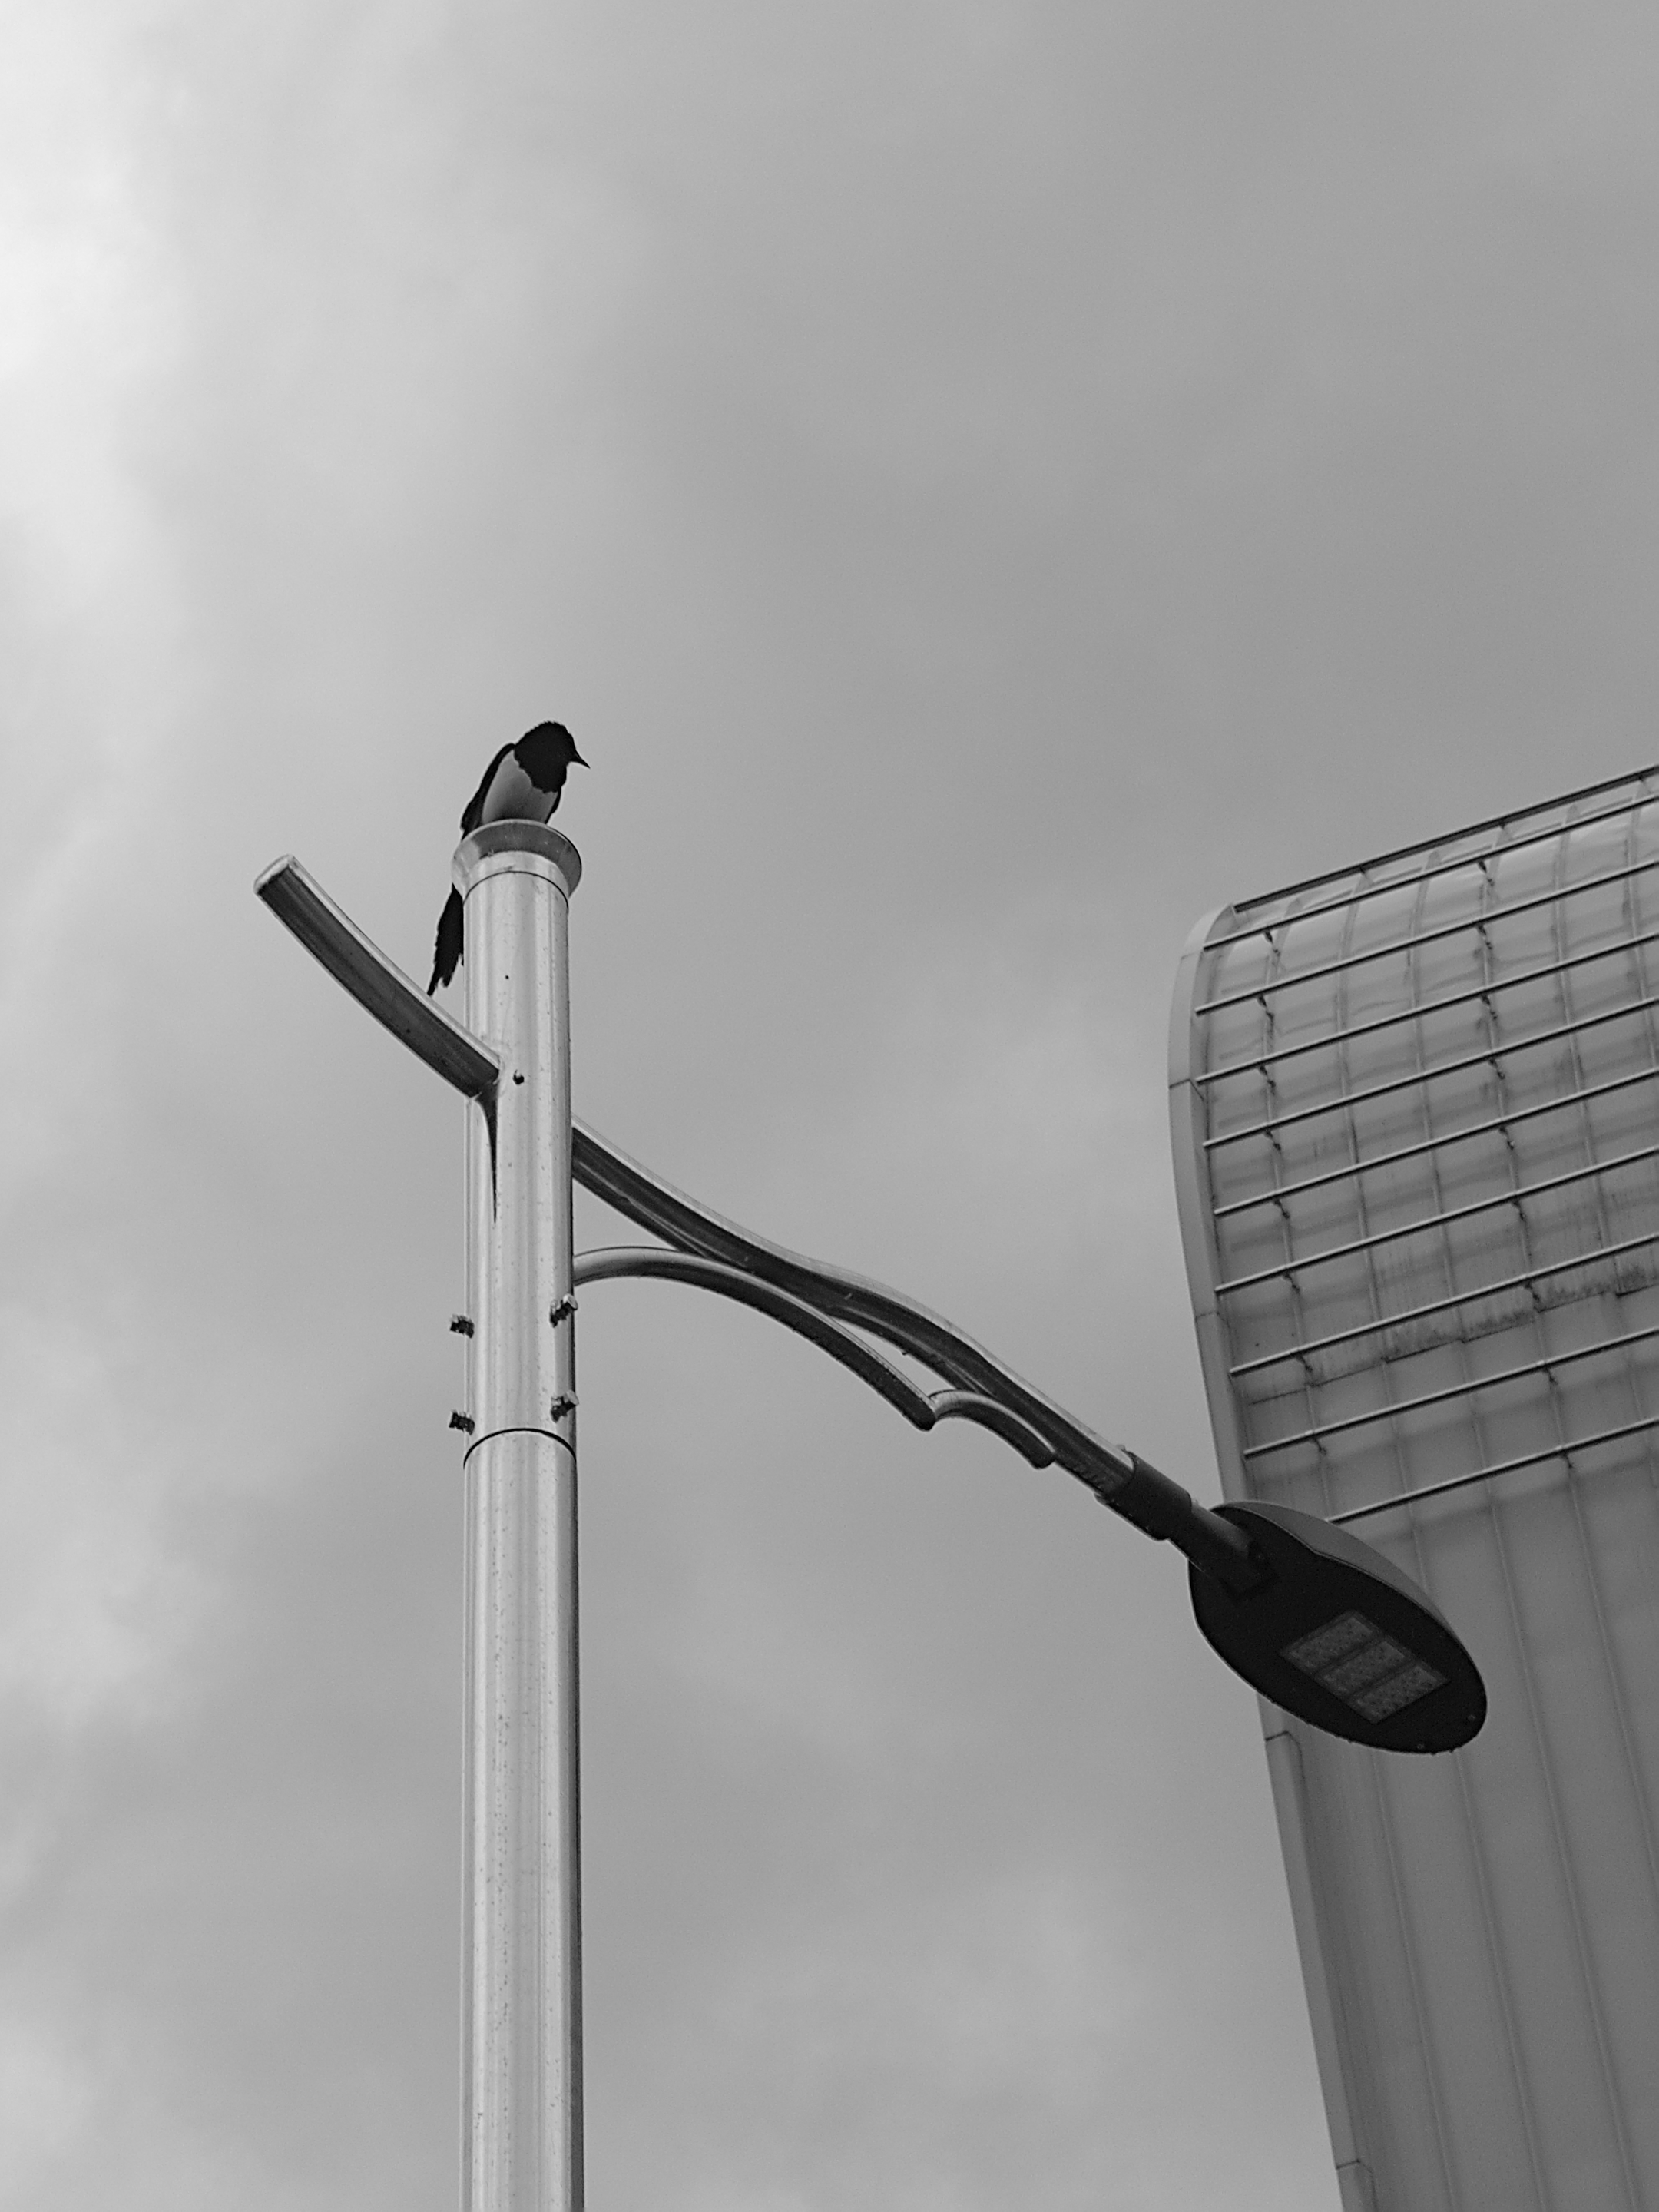 bird sitting on a light pole